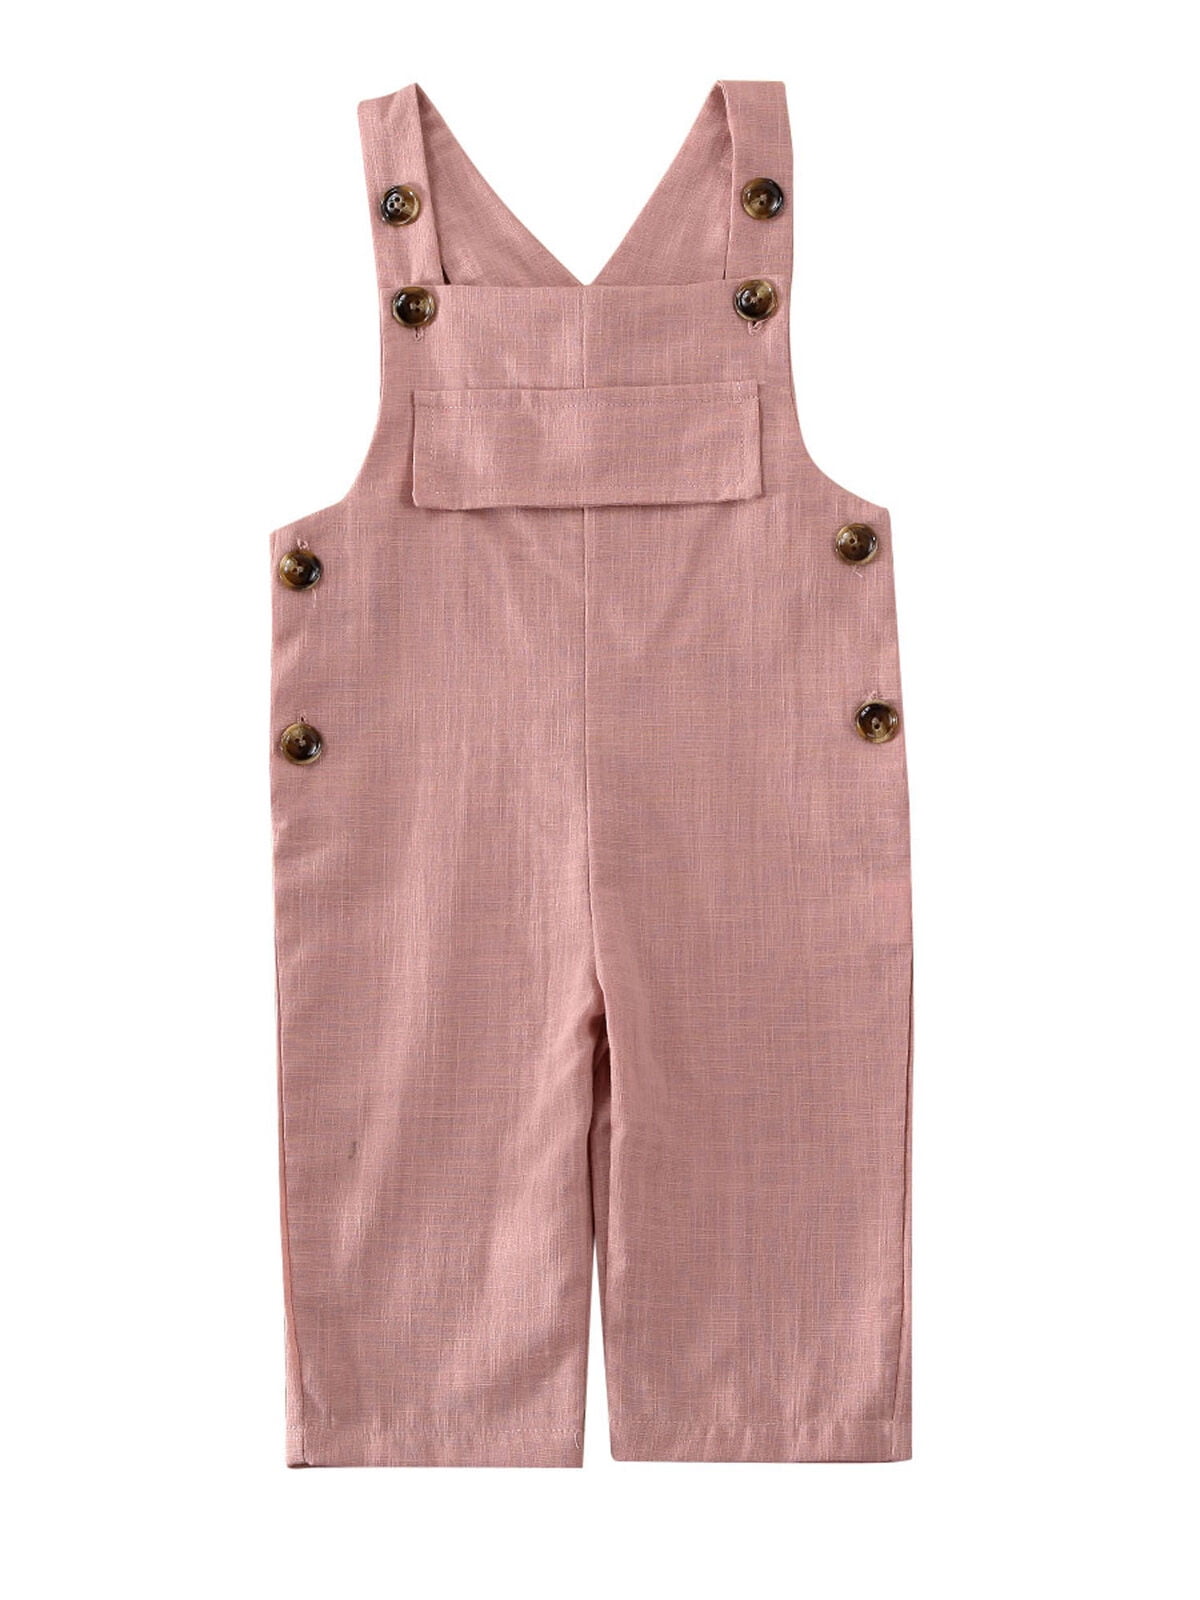 Baby Kid Boy Girl Cotton Linen Sleeveless Romper Infant Suspender Jumpsuit 6-20M 